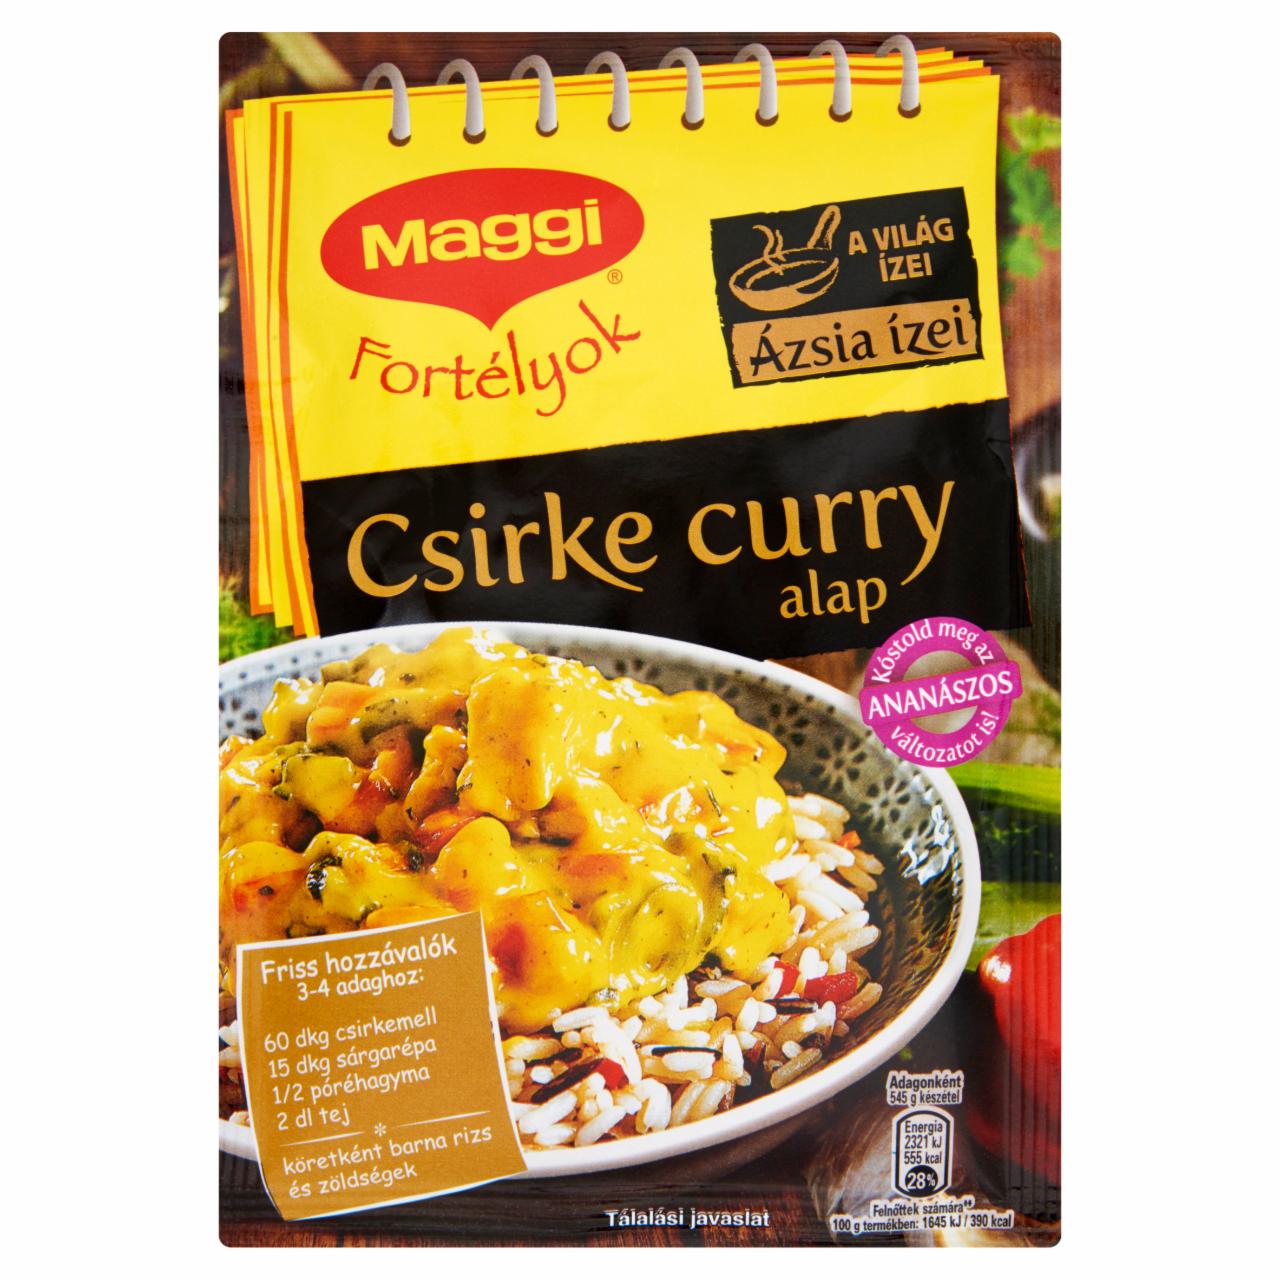 Képek - Maggi Fortélyok Csirke curry alap 47 g